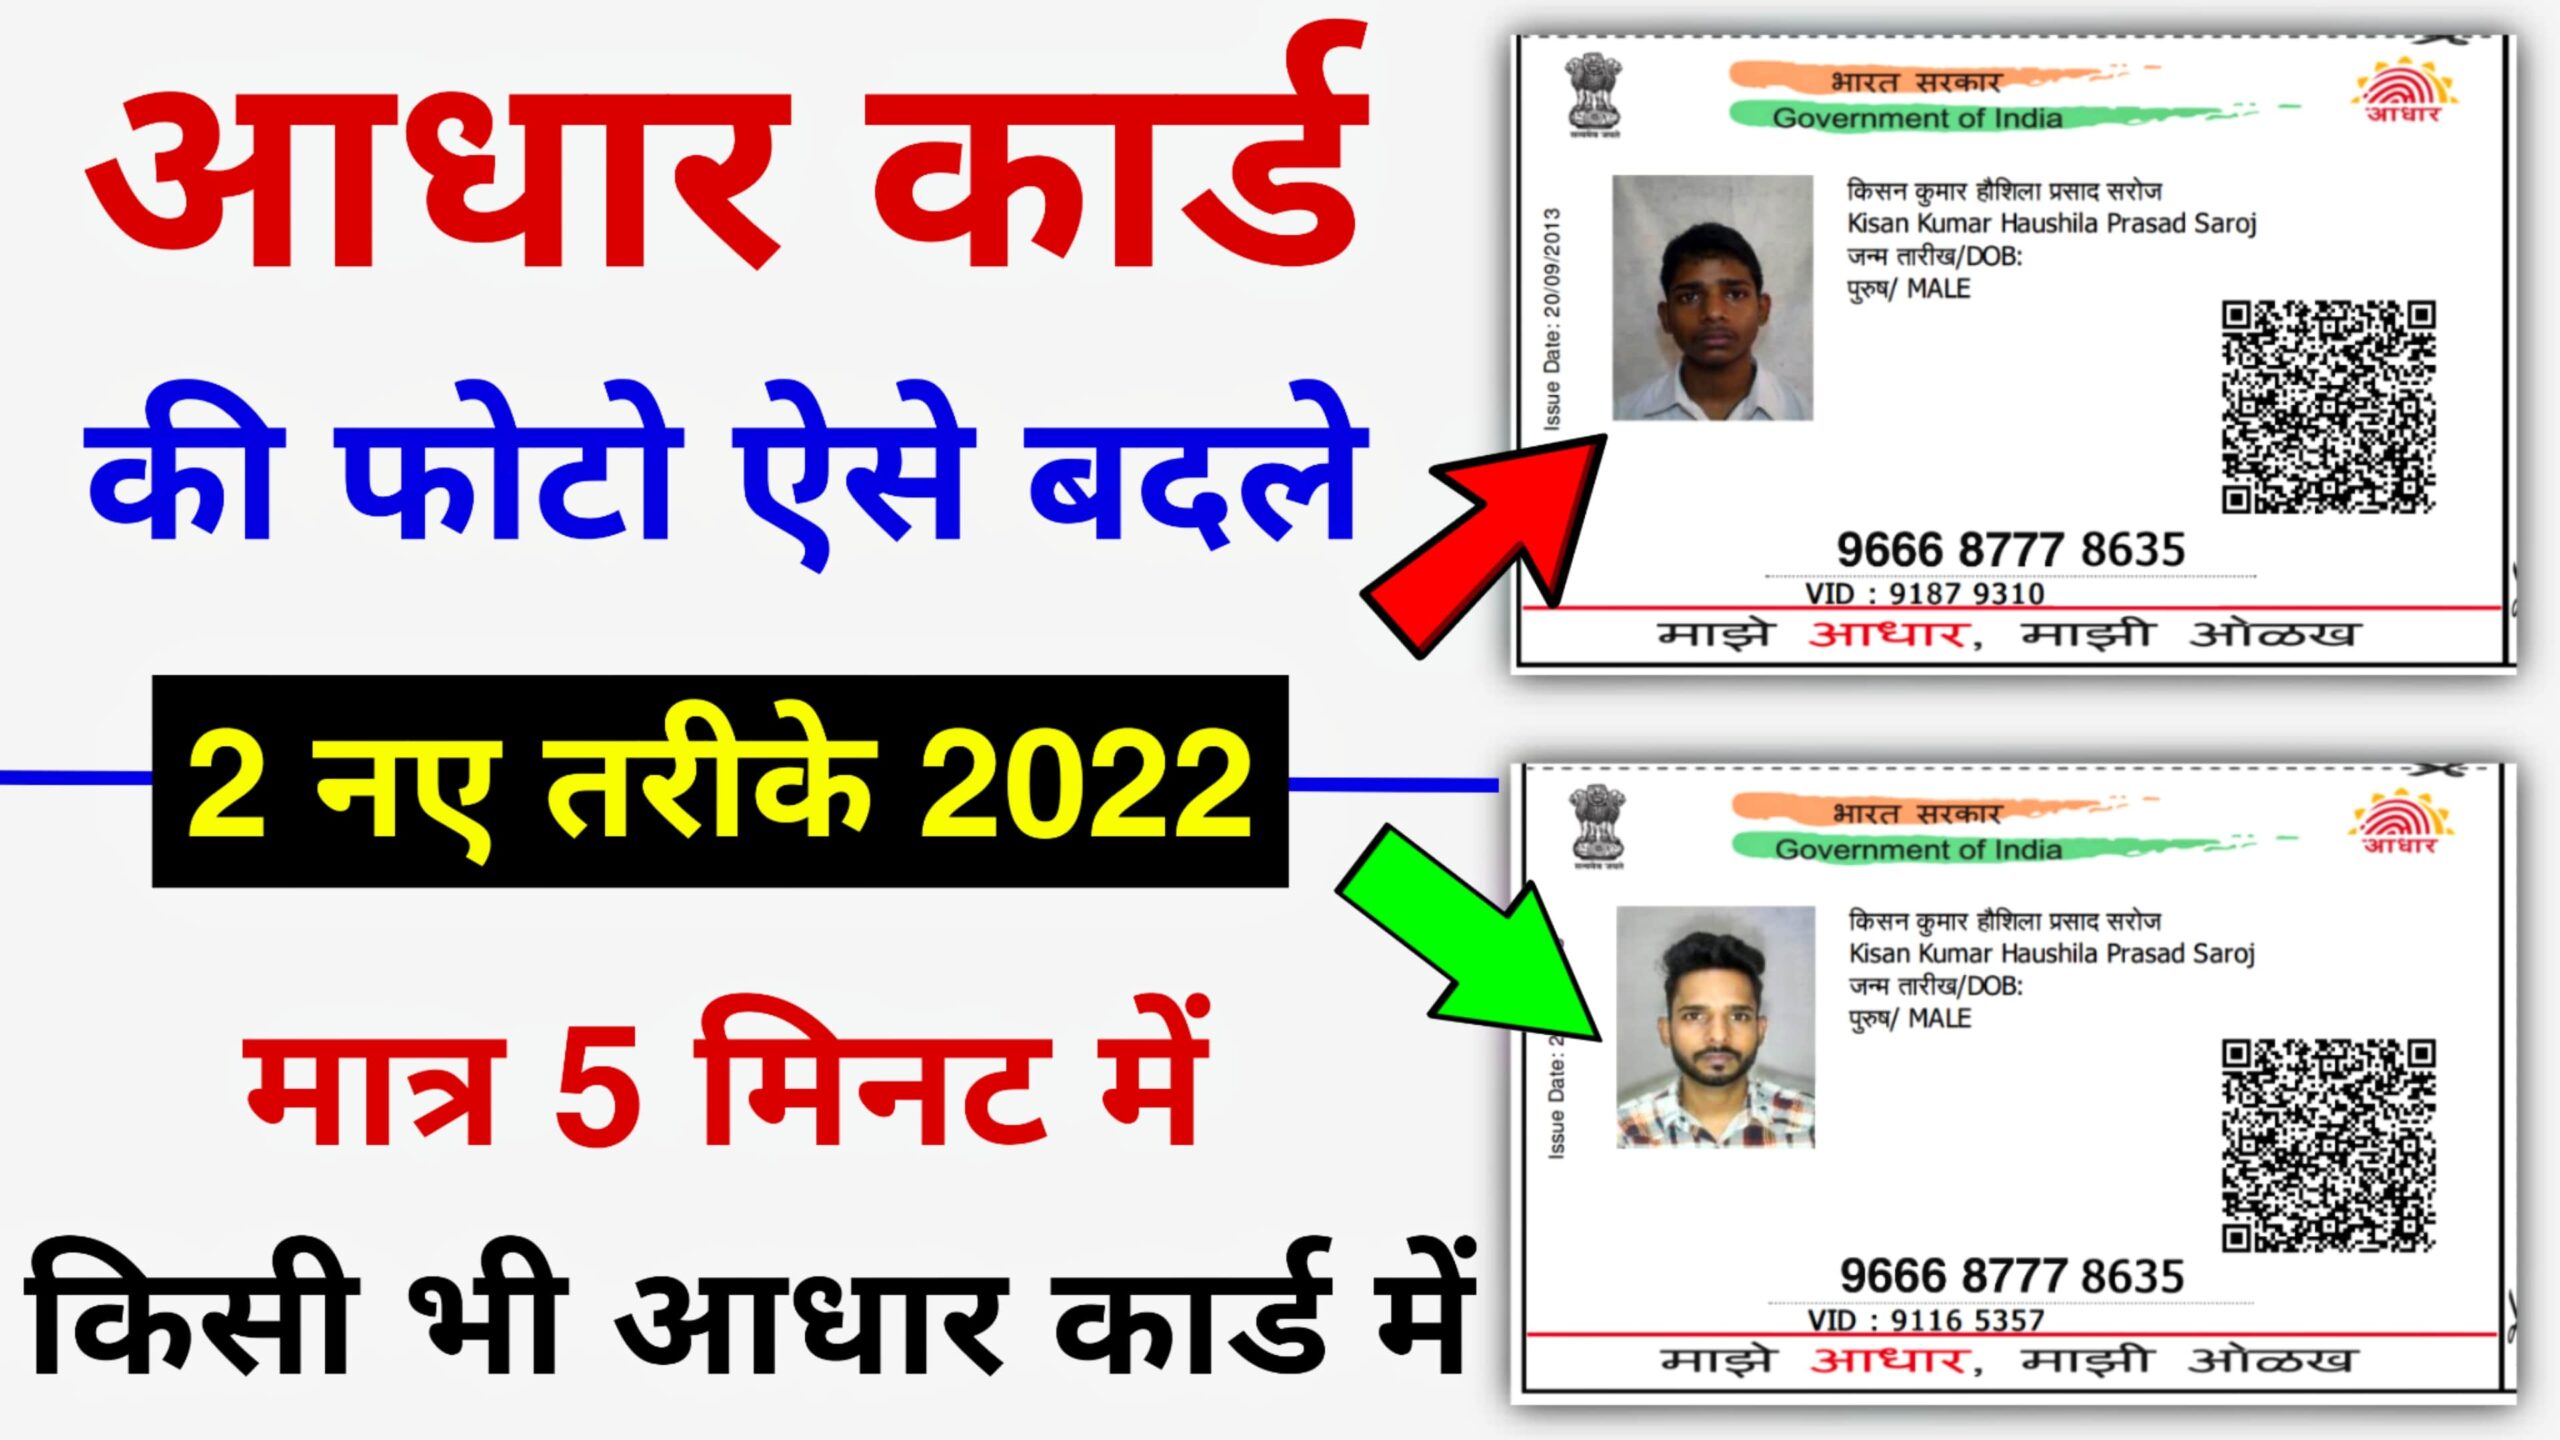 Change Photo in Aadhar Card